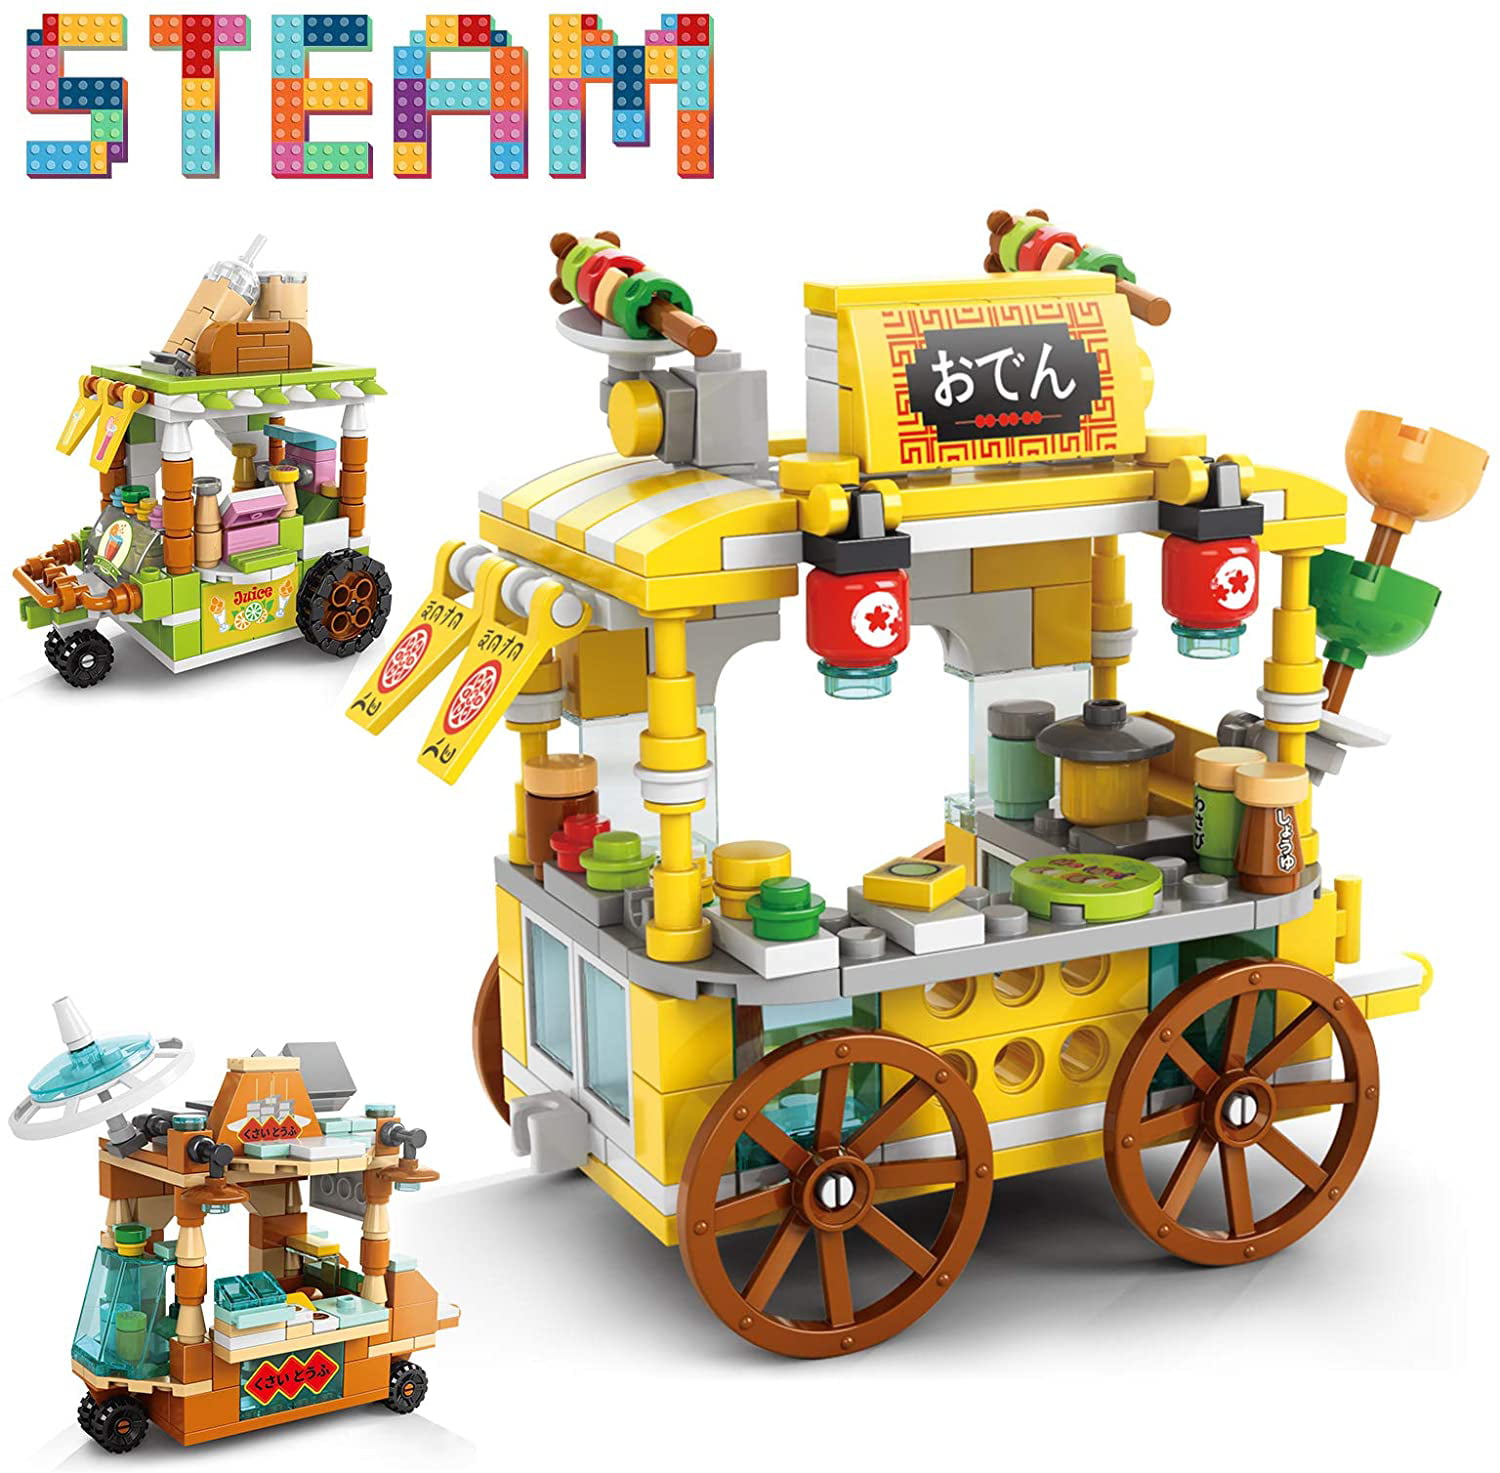 14sets cute mini street view series DIY building blocks kits toys for kids gifts 